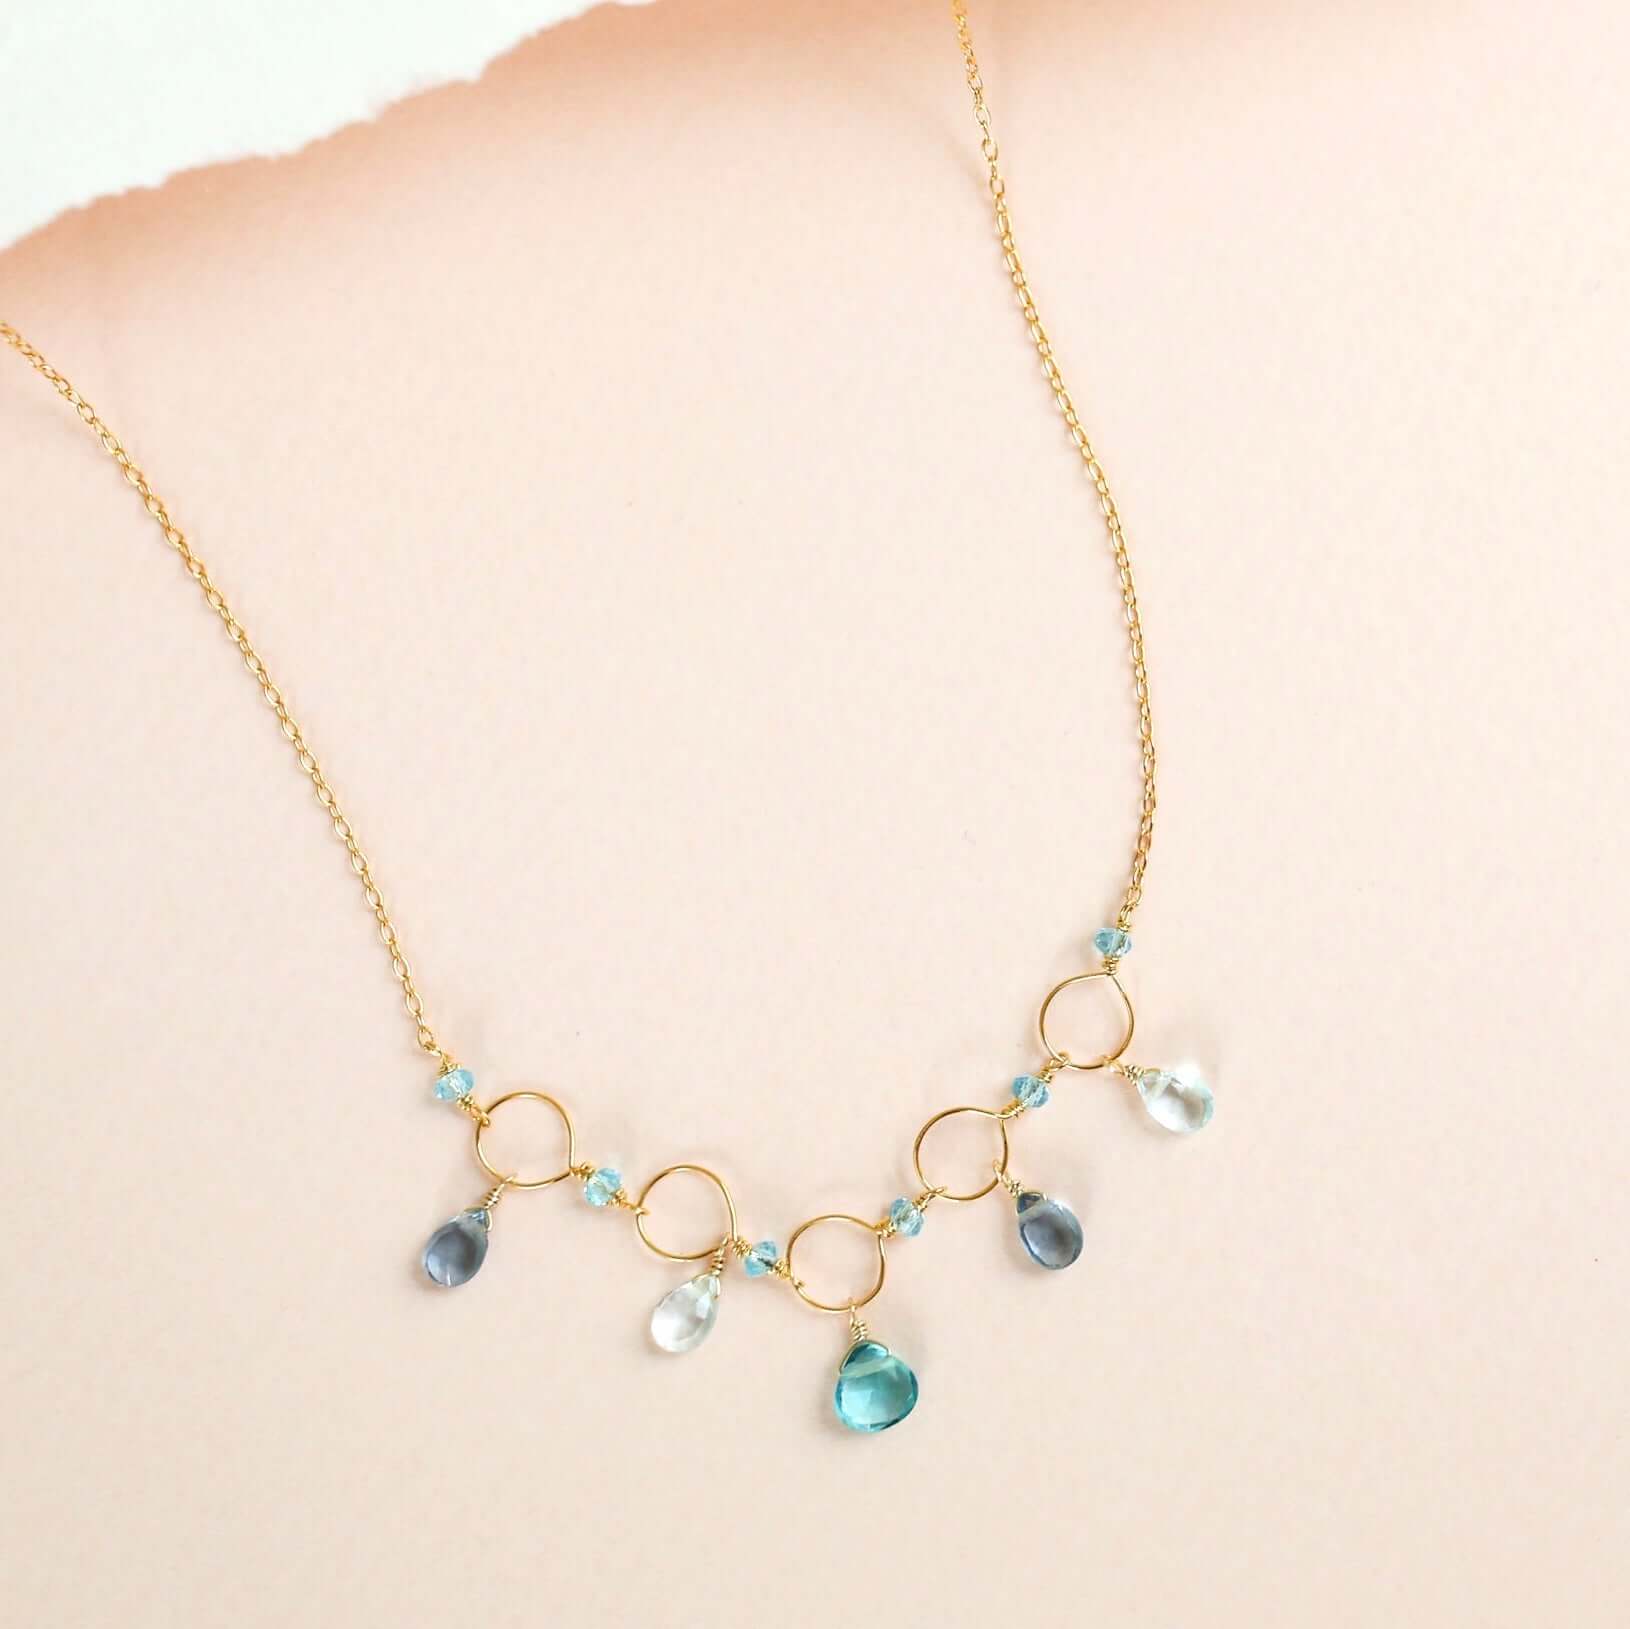 Adjustable Blue Gemstone Chain Necklace